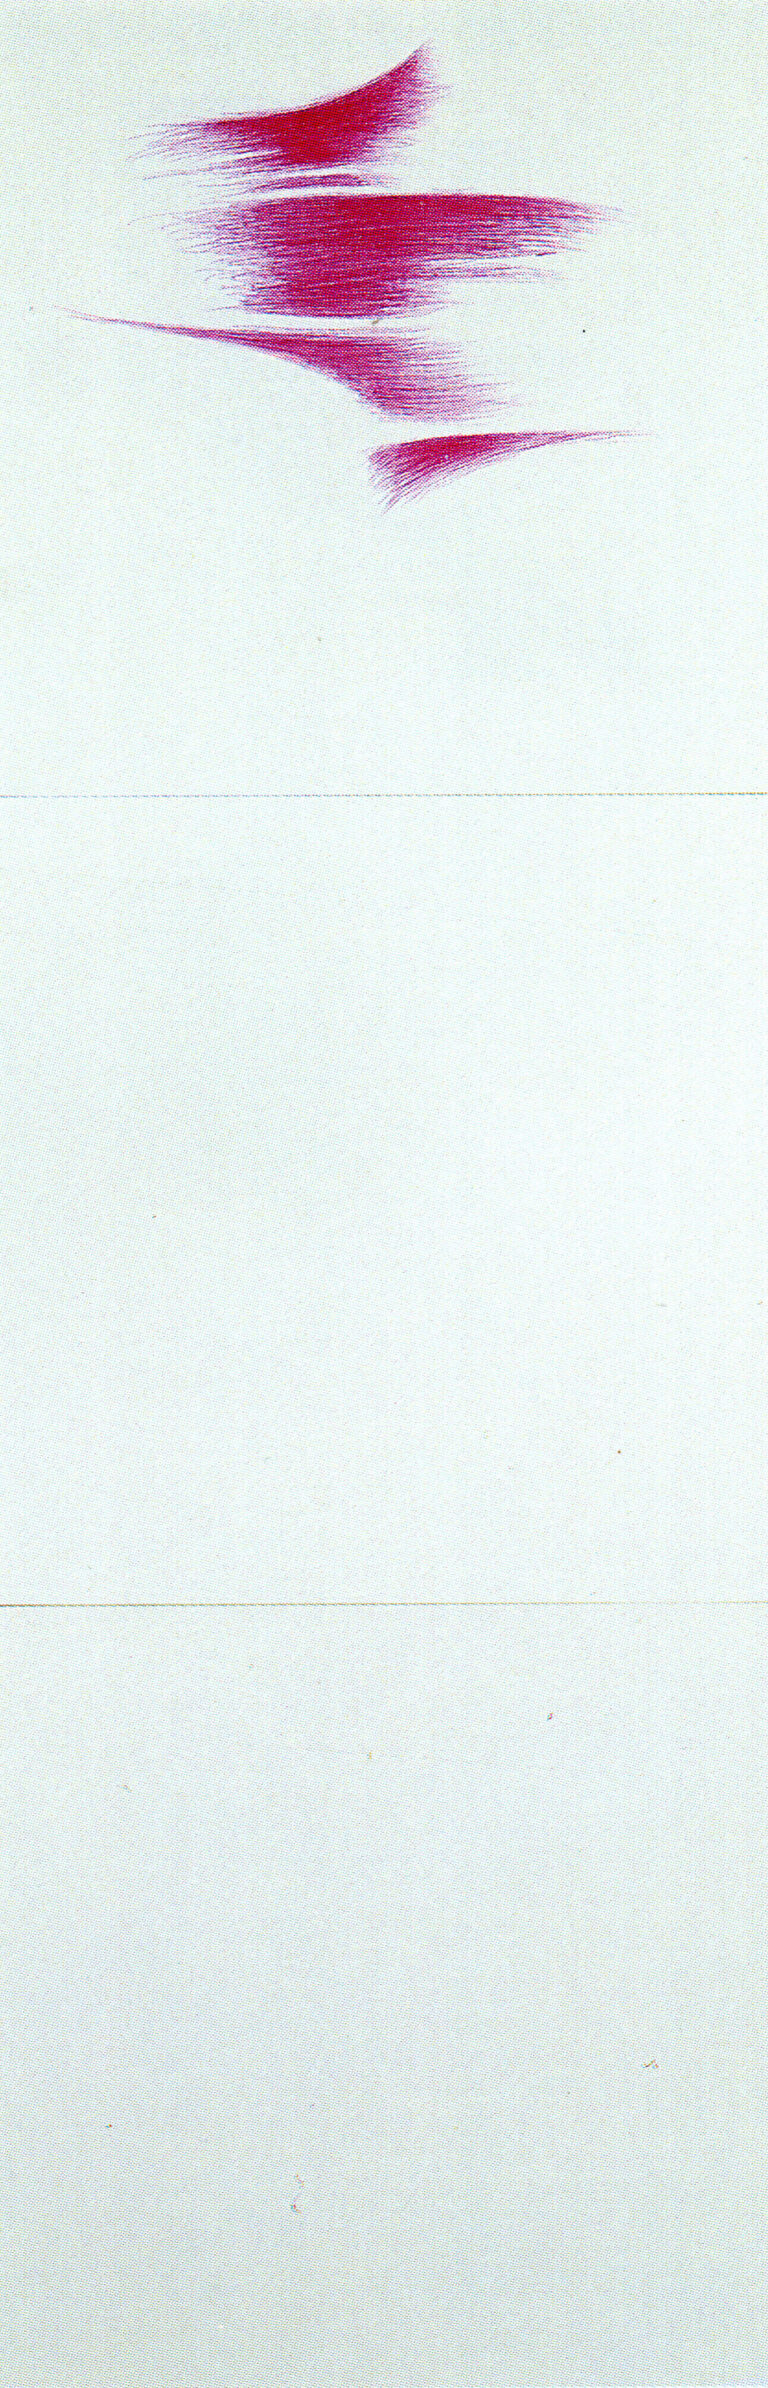 1989 - penna a sfera su carta intelata - cm 103,5x34,5